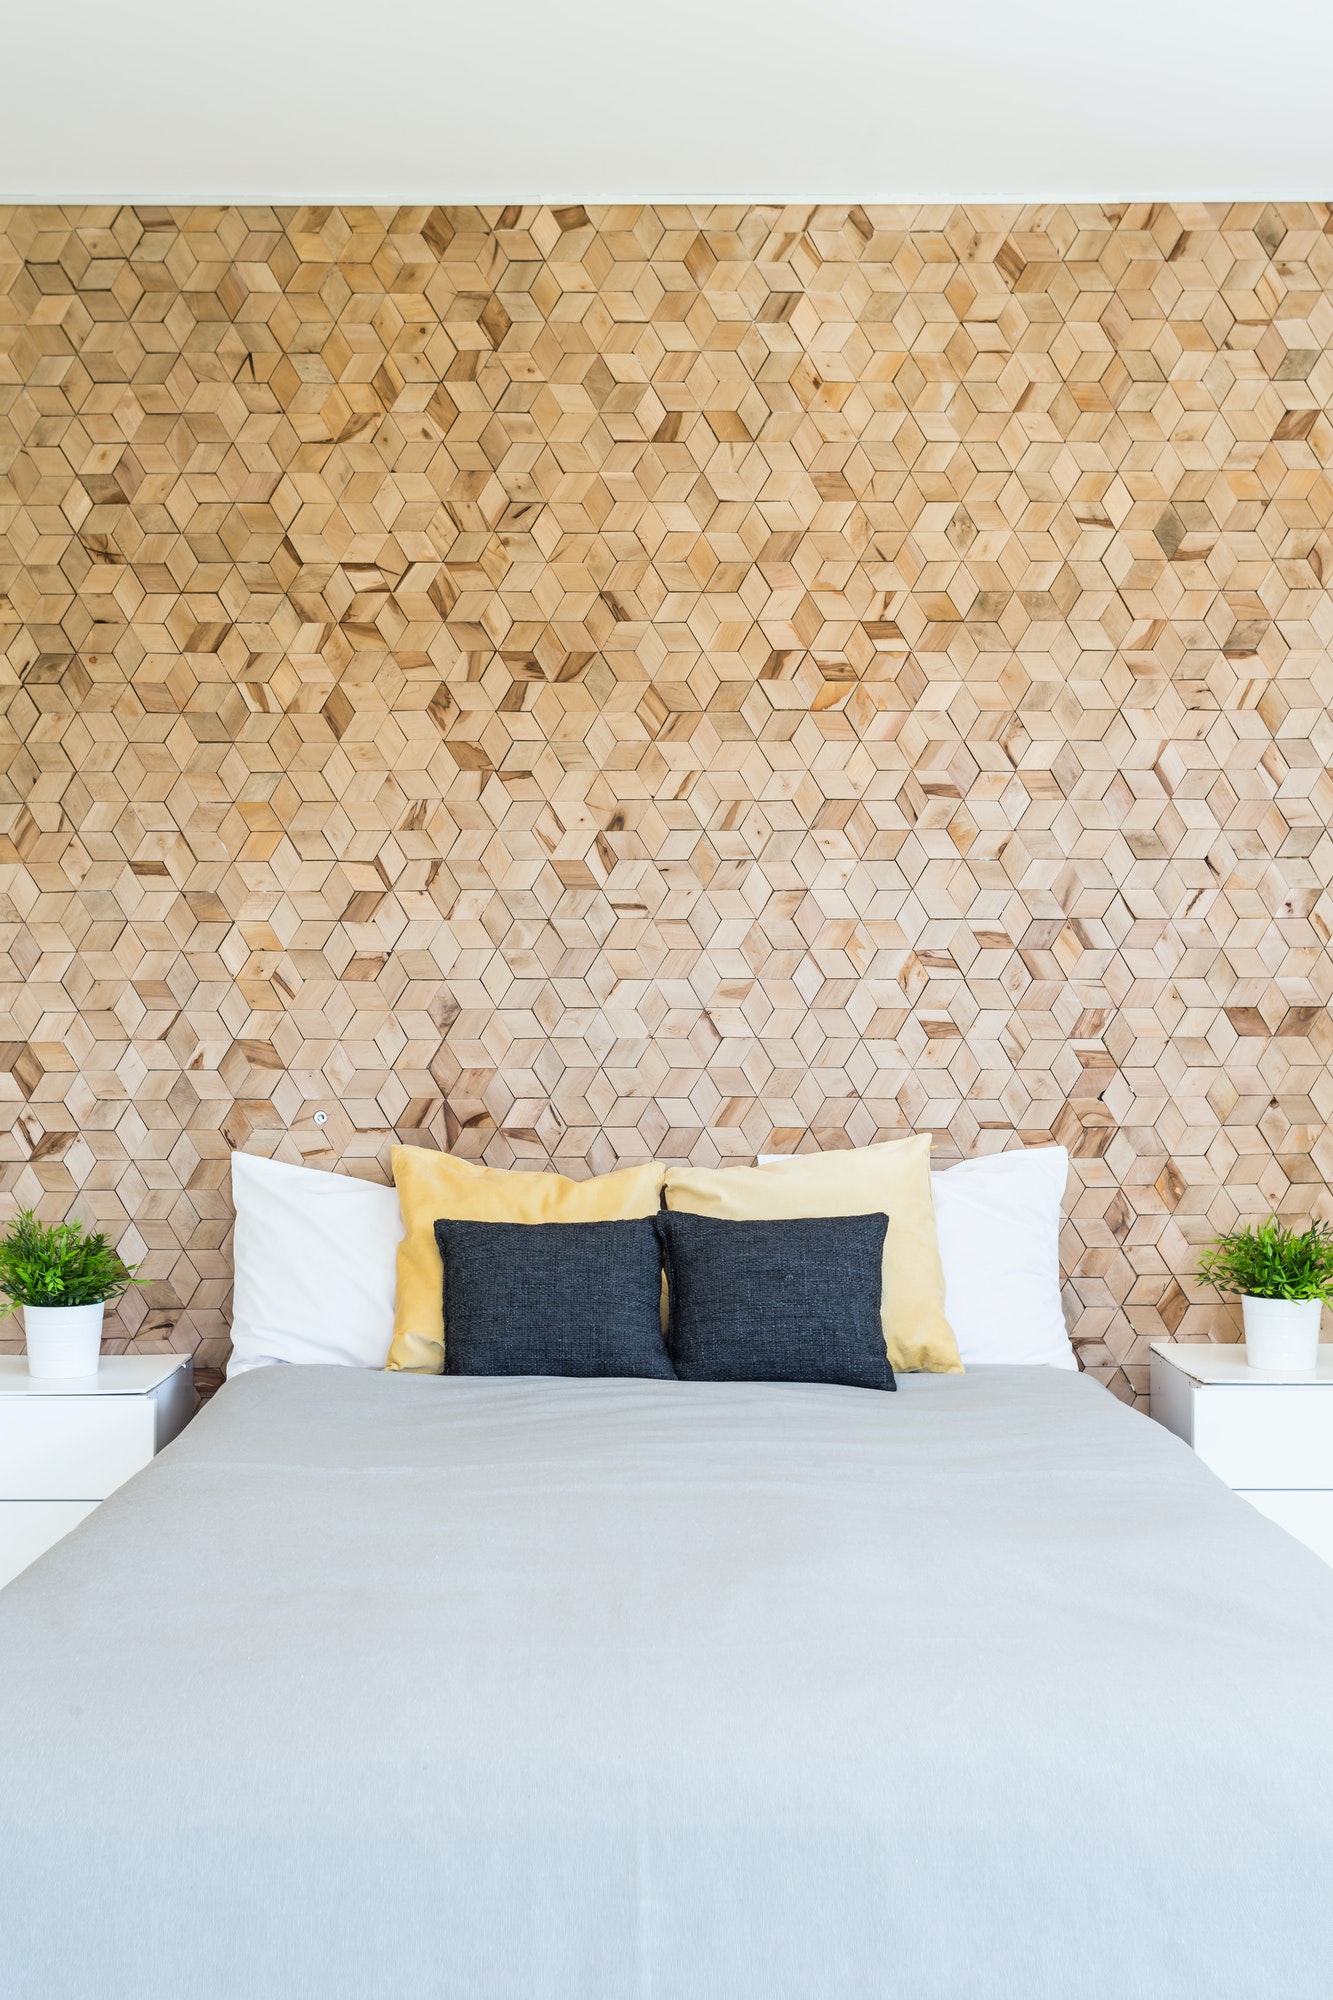 Scandynacian style cork wall in bedroom